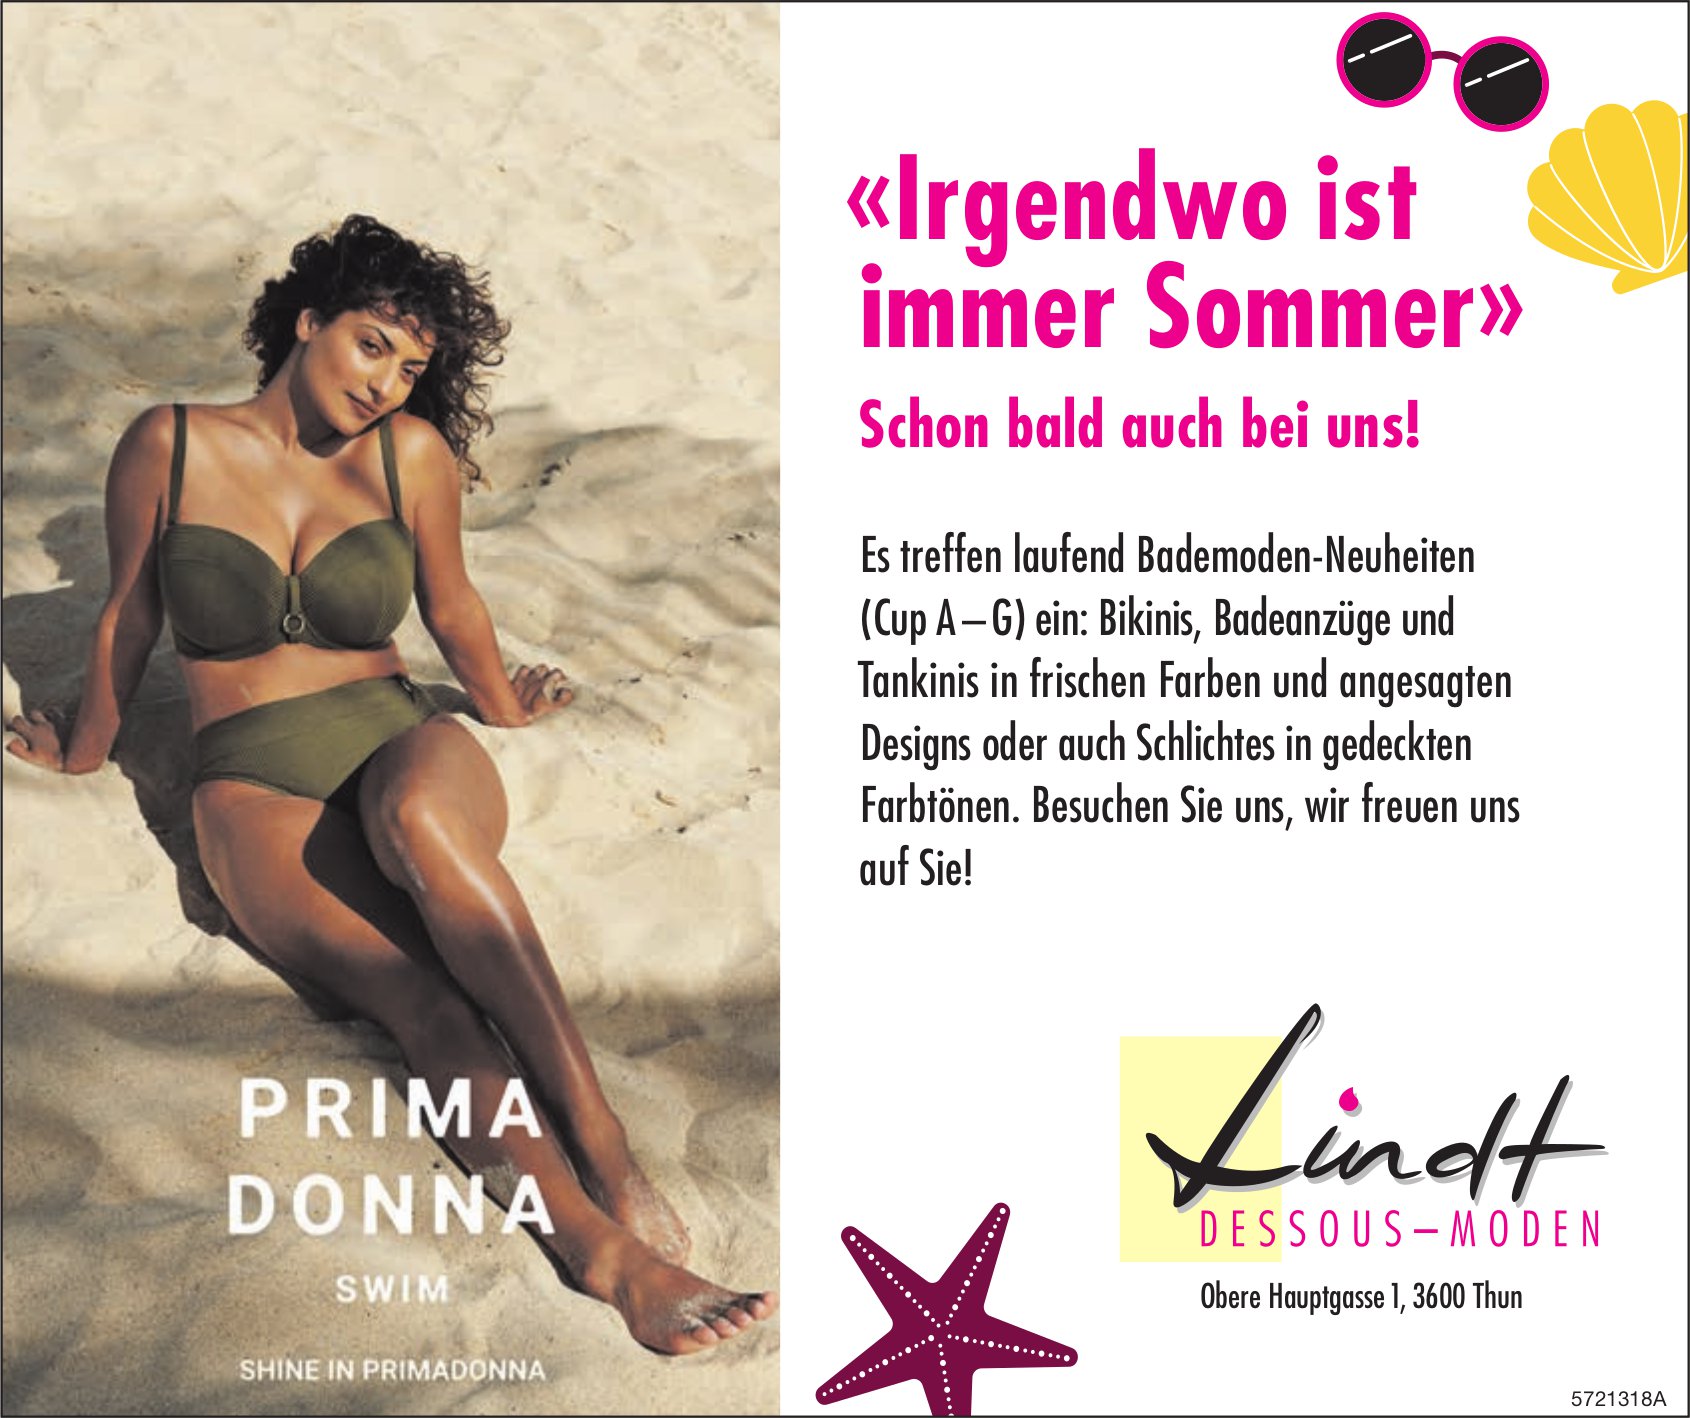 Lindt Dessous-Moden, Thun - «Irgendwo ist immer Sommer» Schon bald auch bei uns!